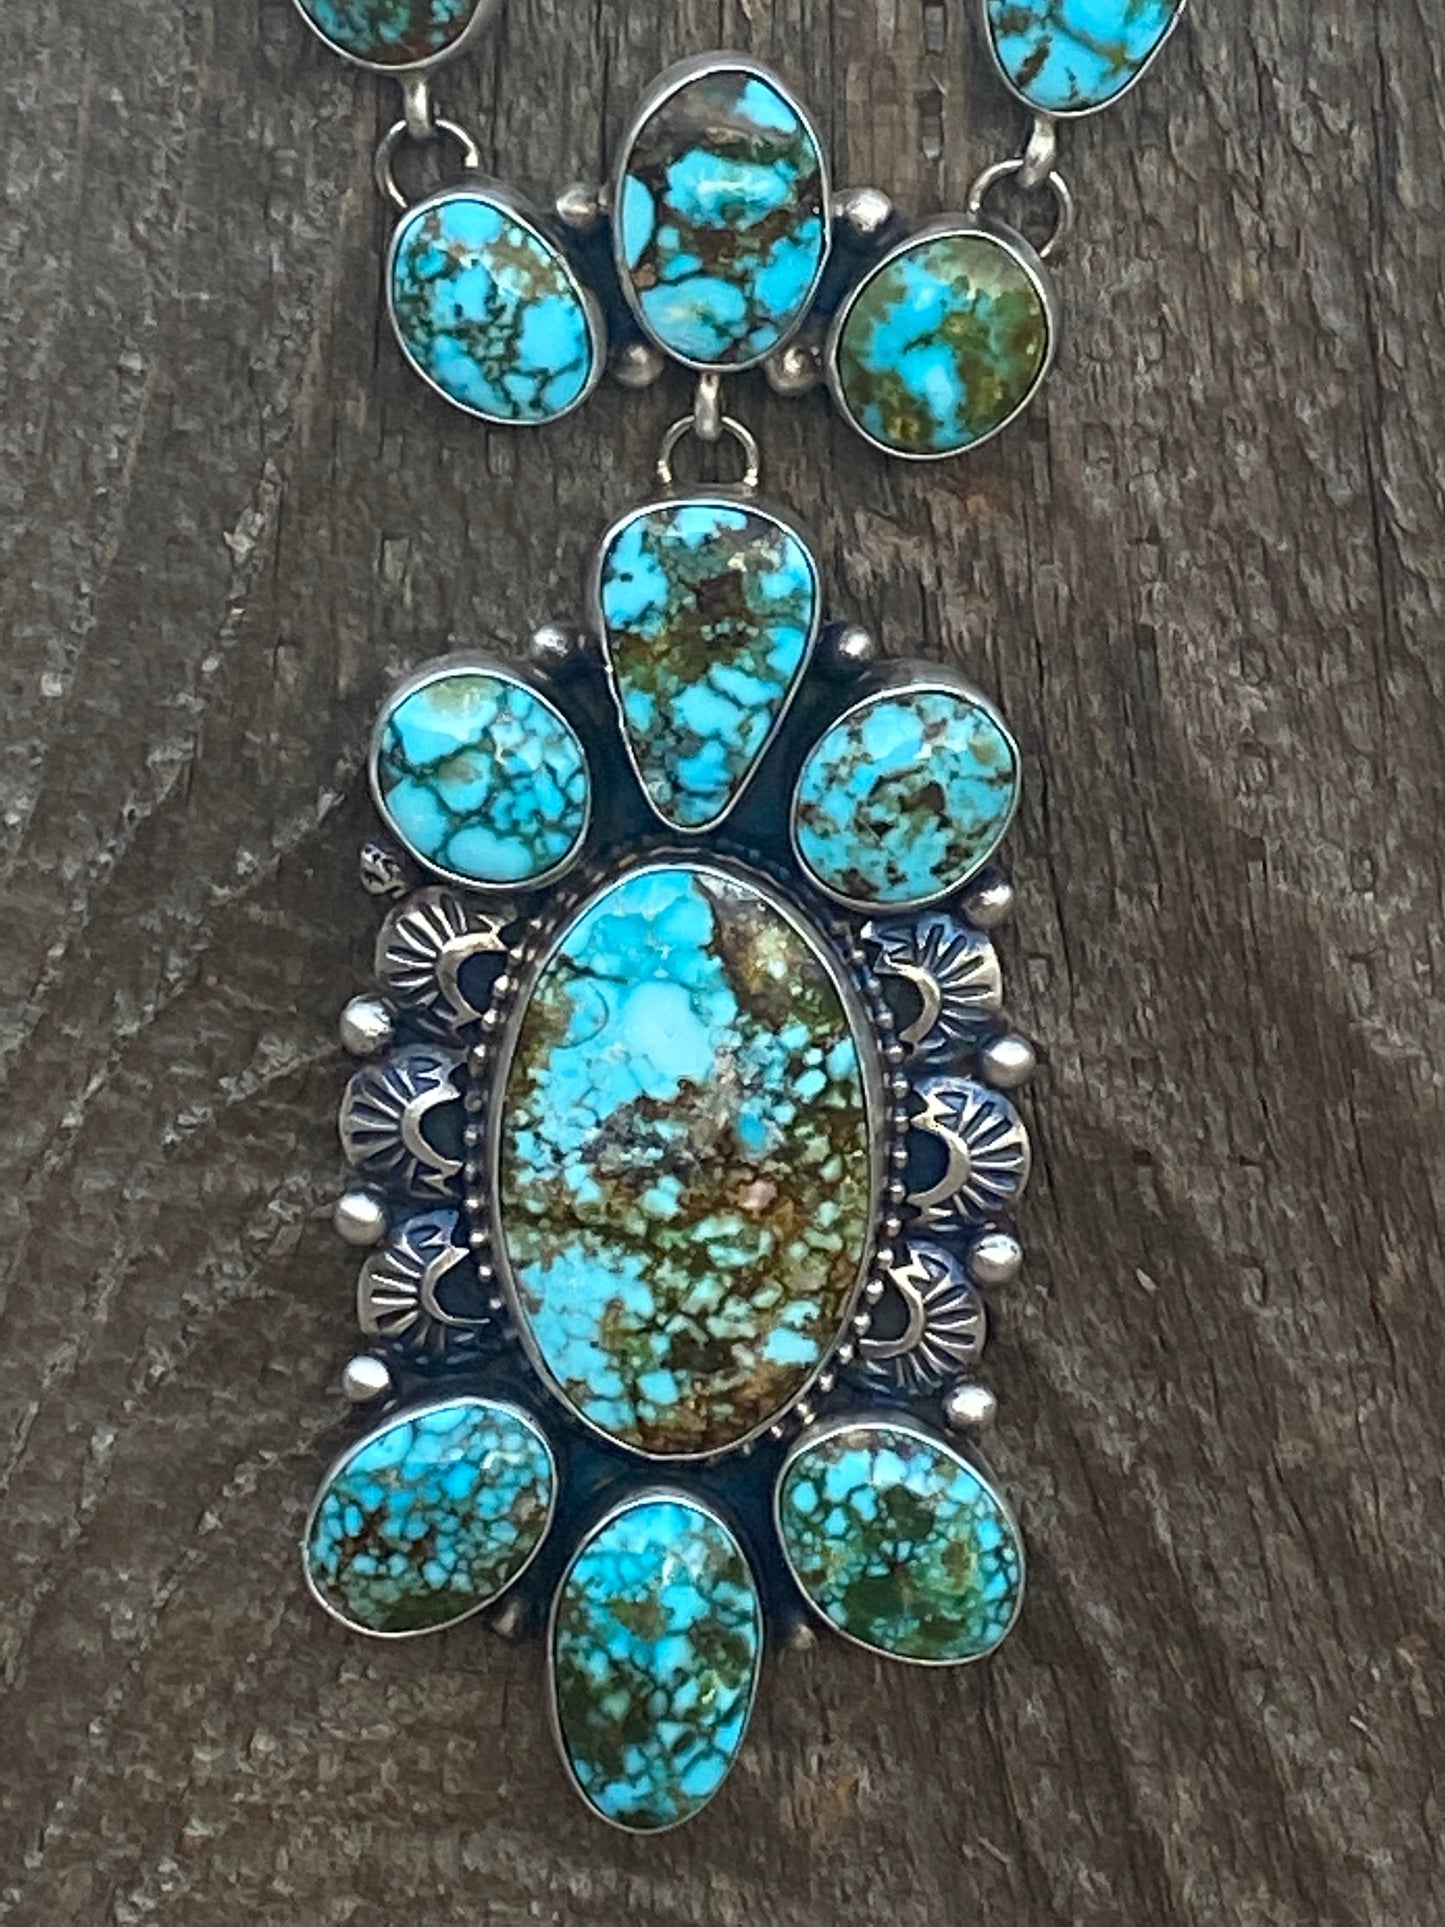 Kingman Web Turquoise Necklace set By Paul Livingston Signed